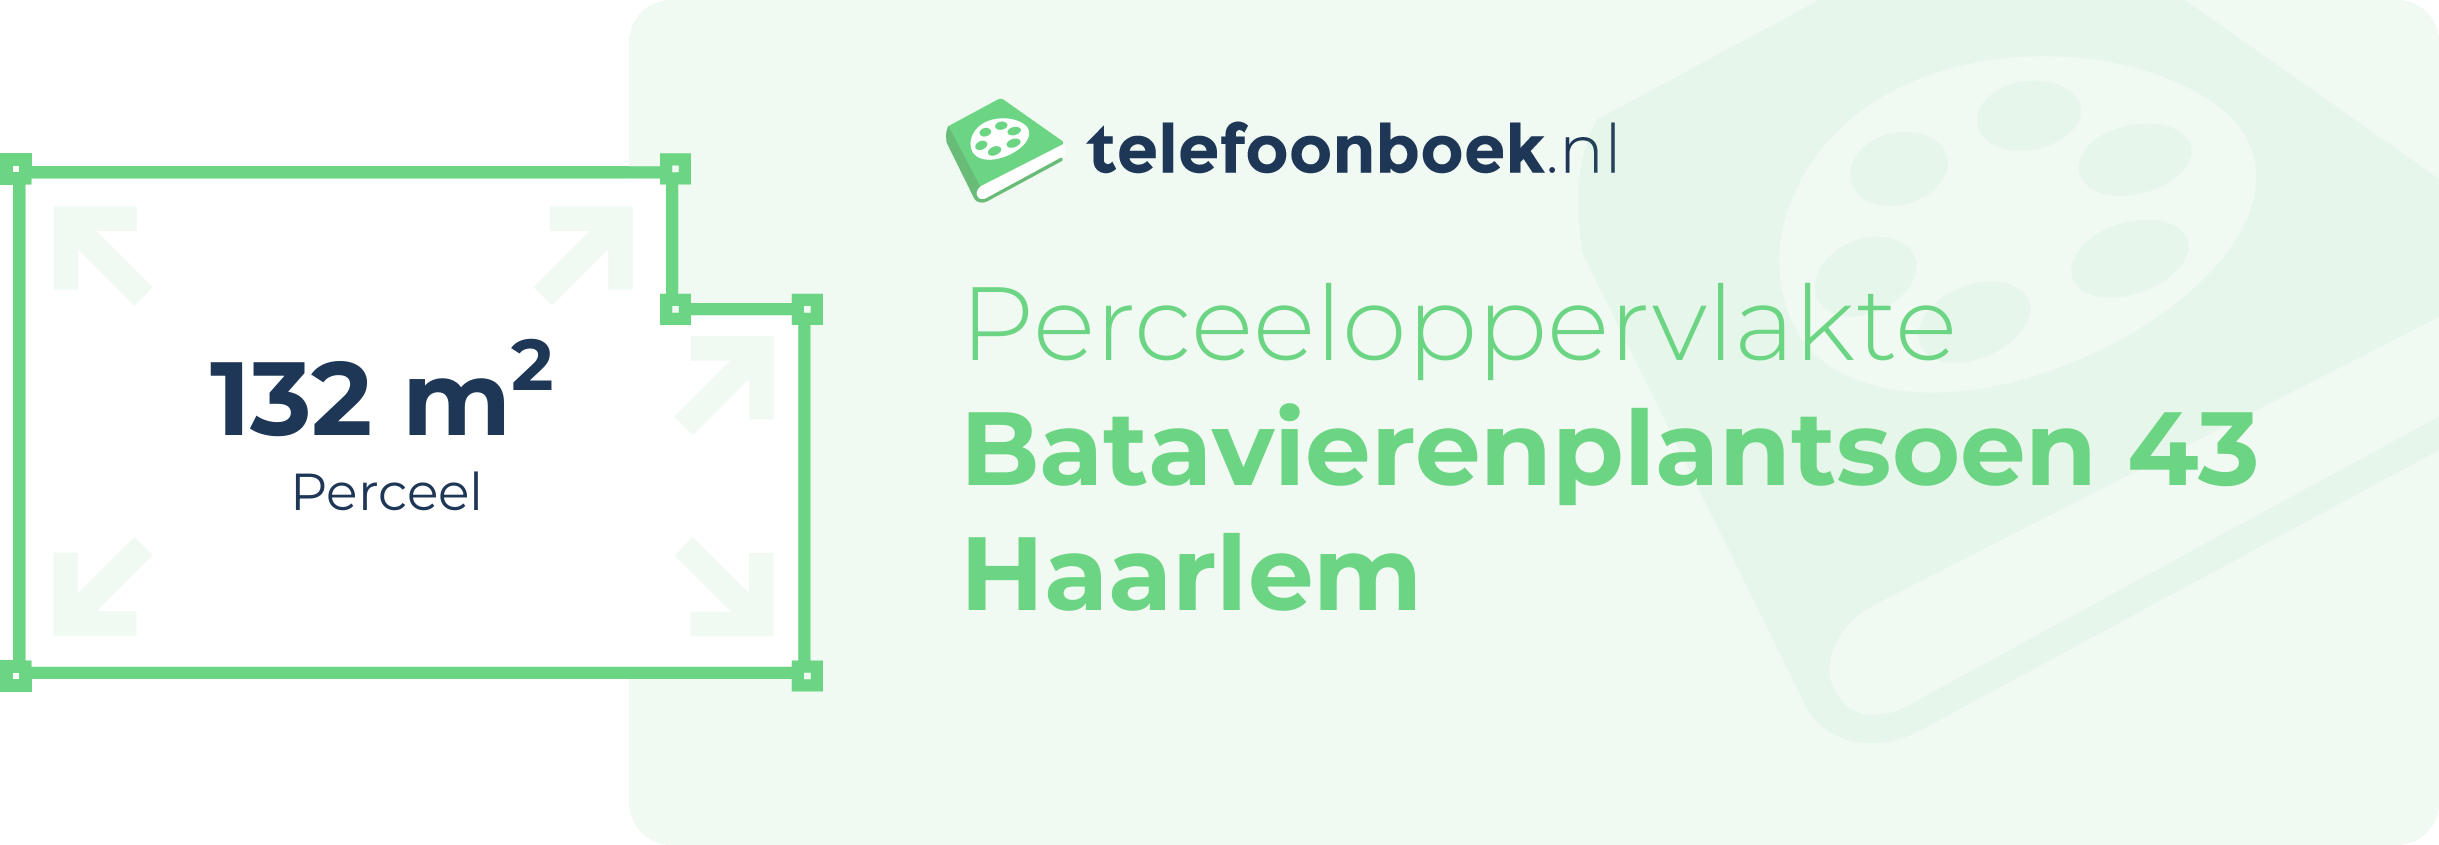 Perceeloppervlakte Batavierenplantsoen 43 Haarlem